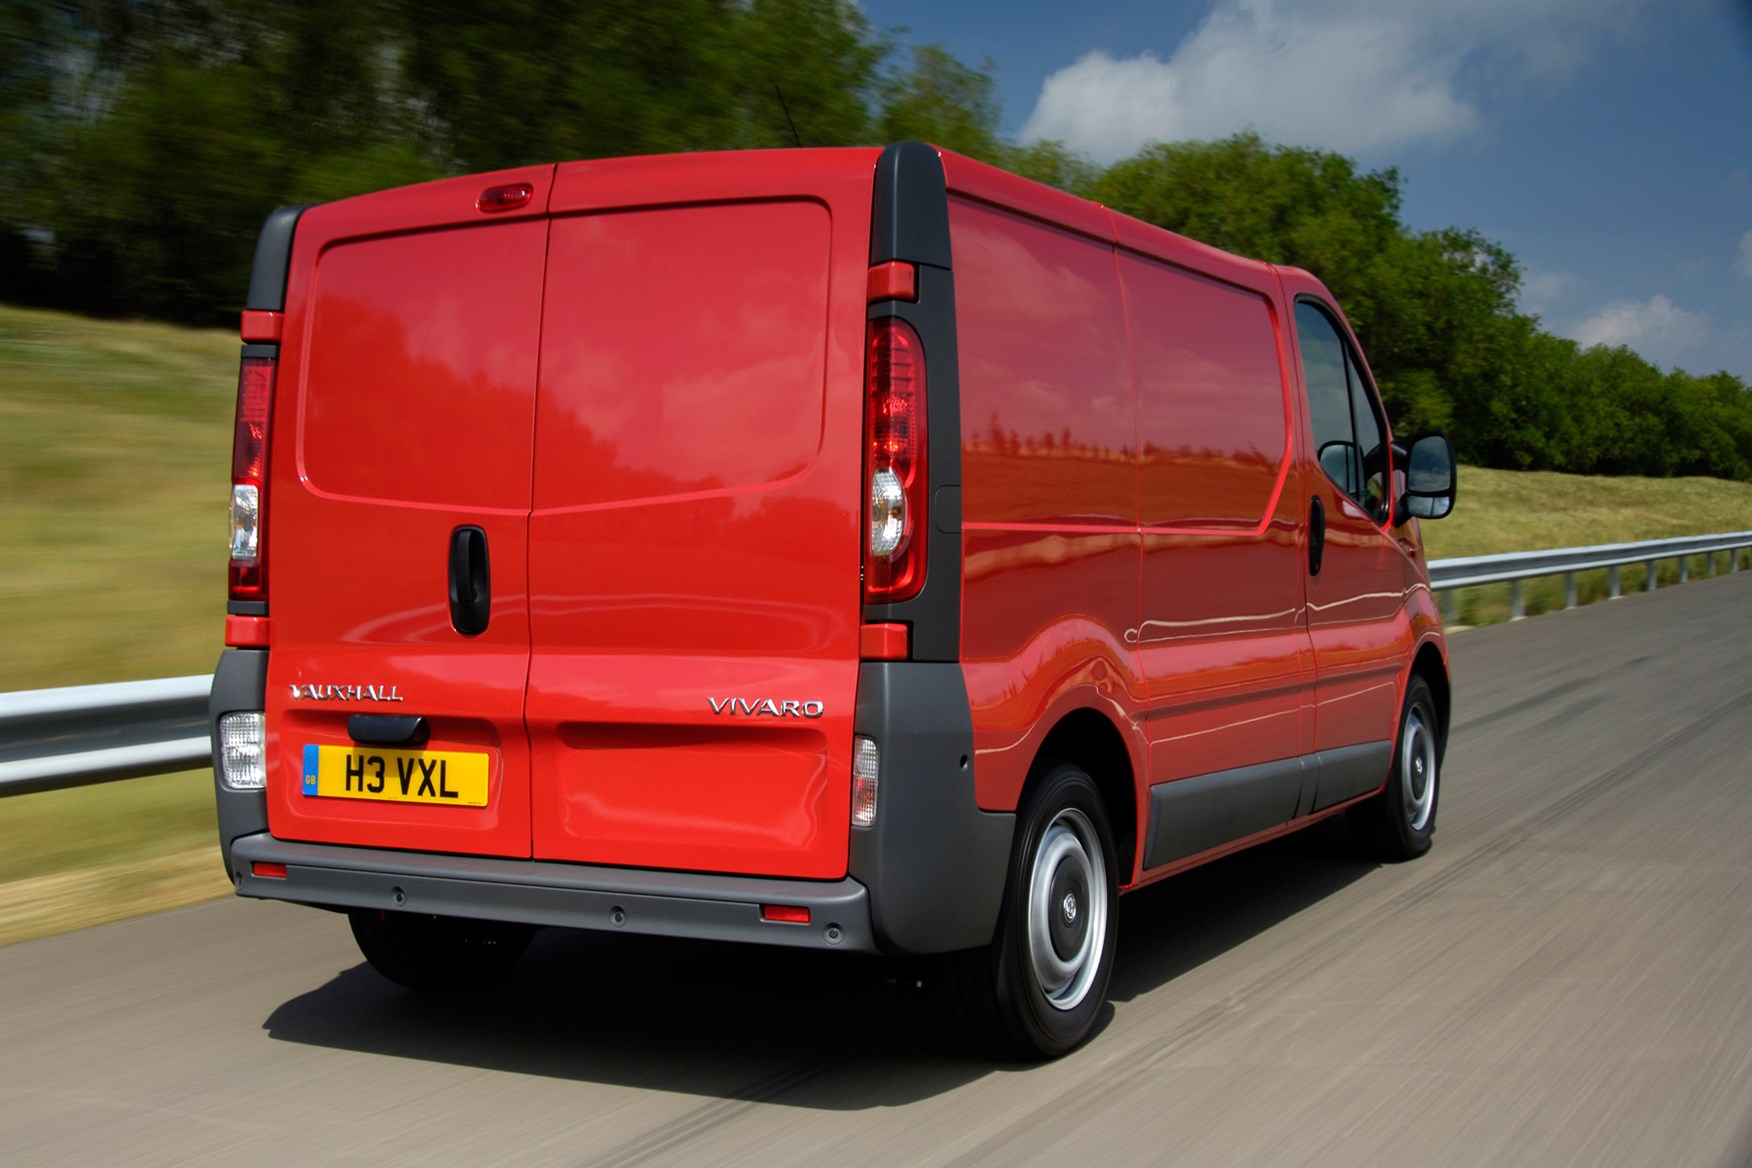 Vauxhall Vivaro review on Parkers Vans - rear